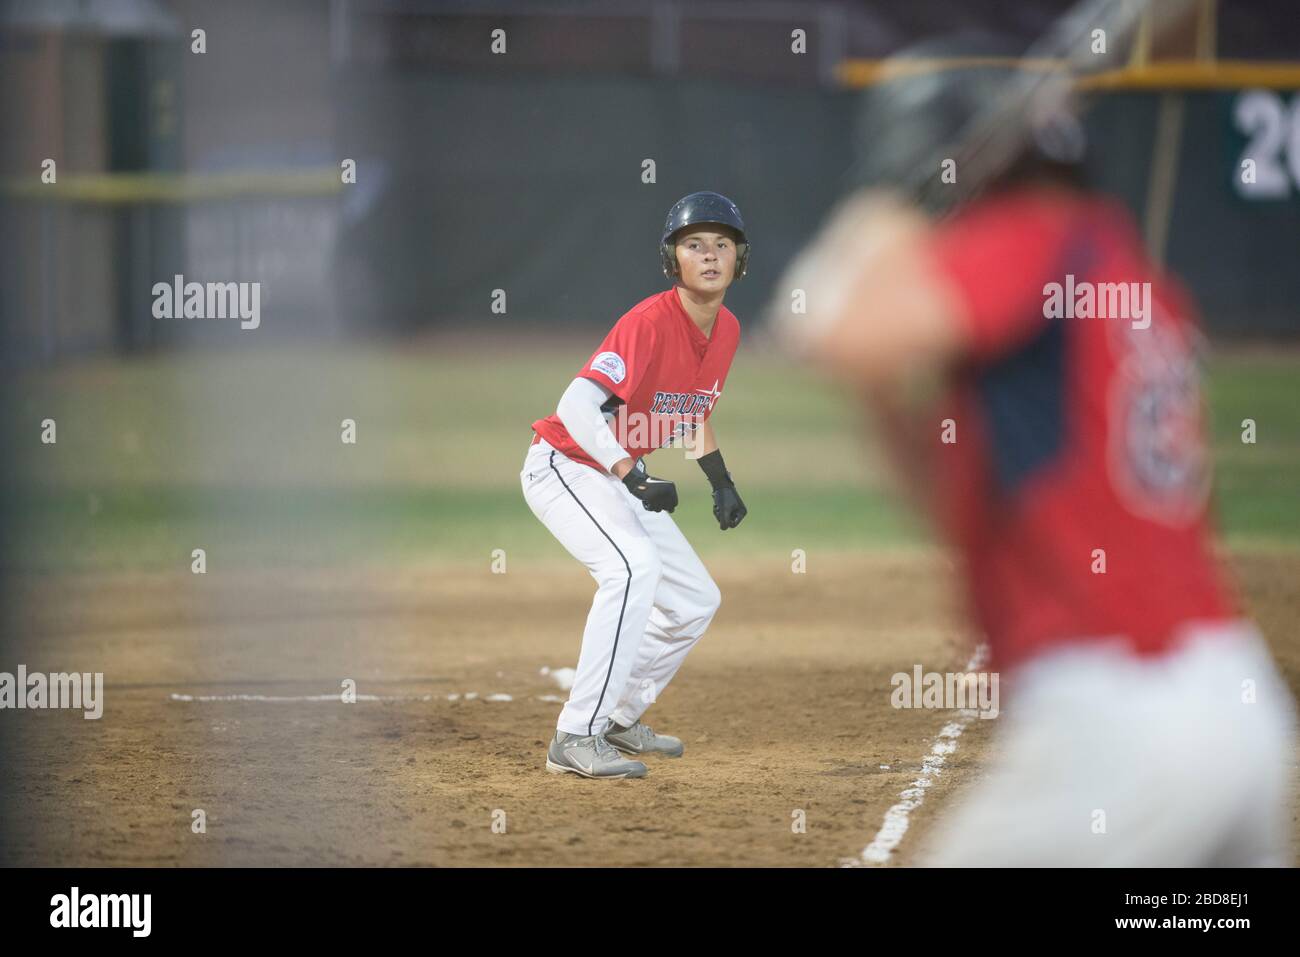 Teen baseball player leading off third base Stock Photo